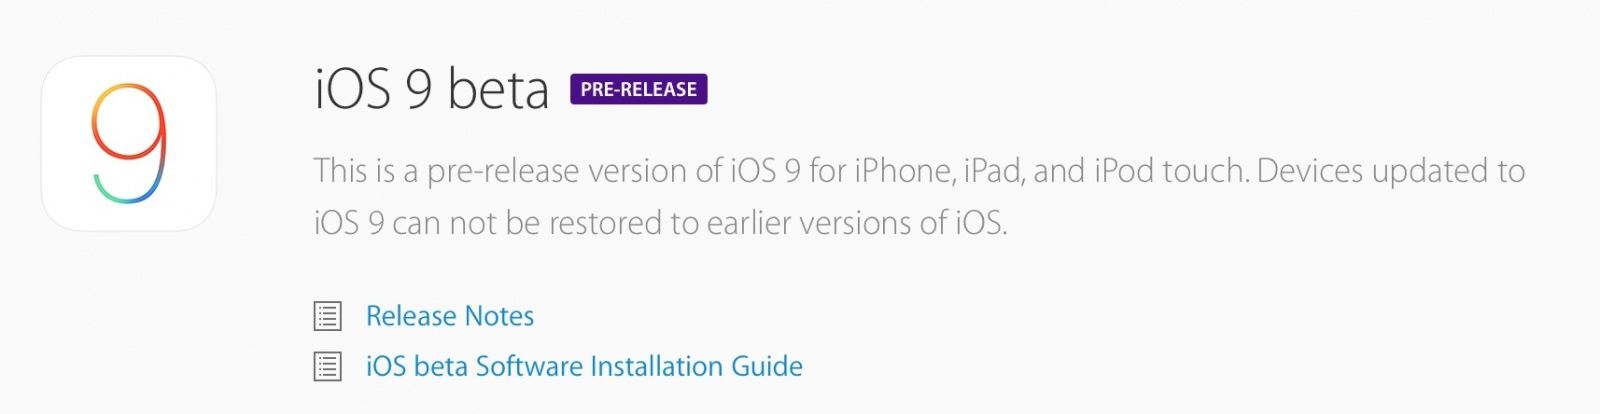 iOS-9-beta